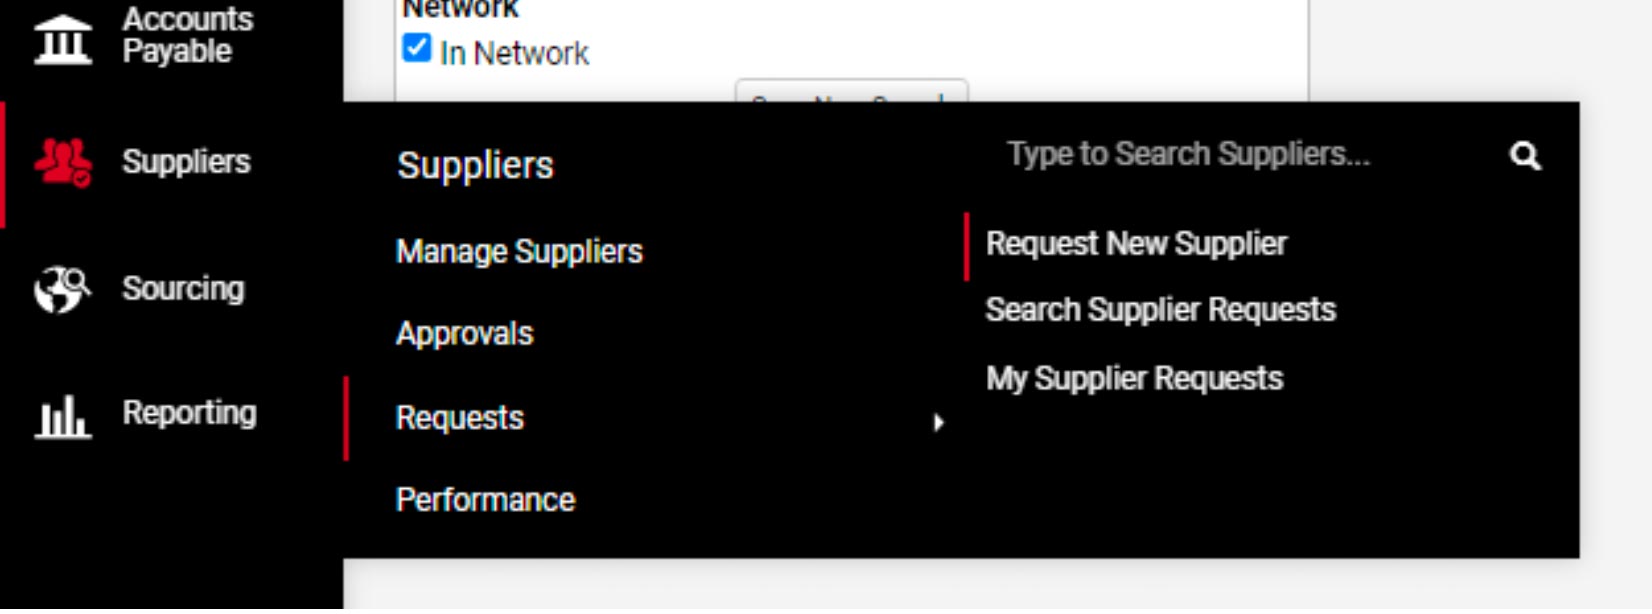 request new supplier screen capture